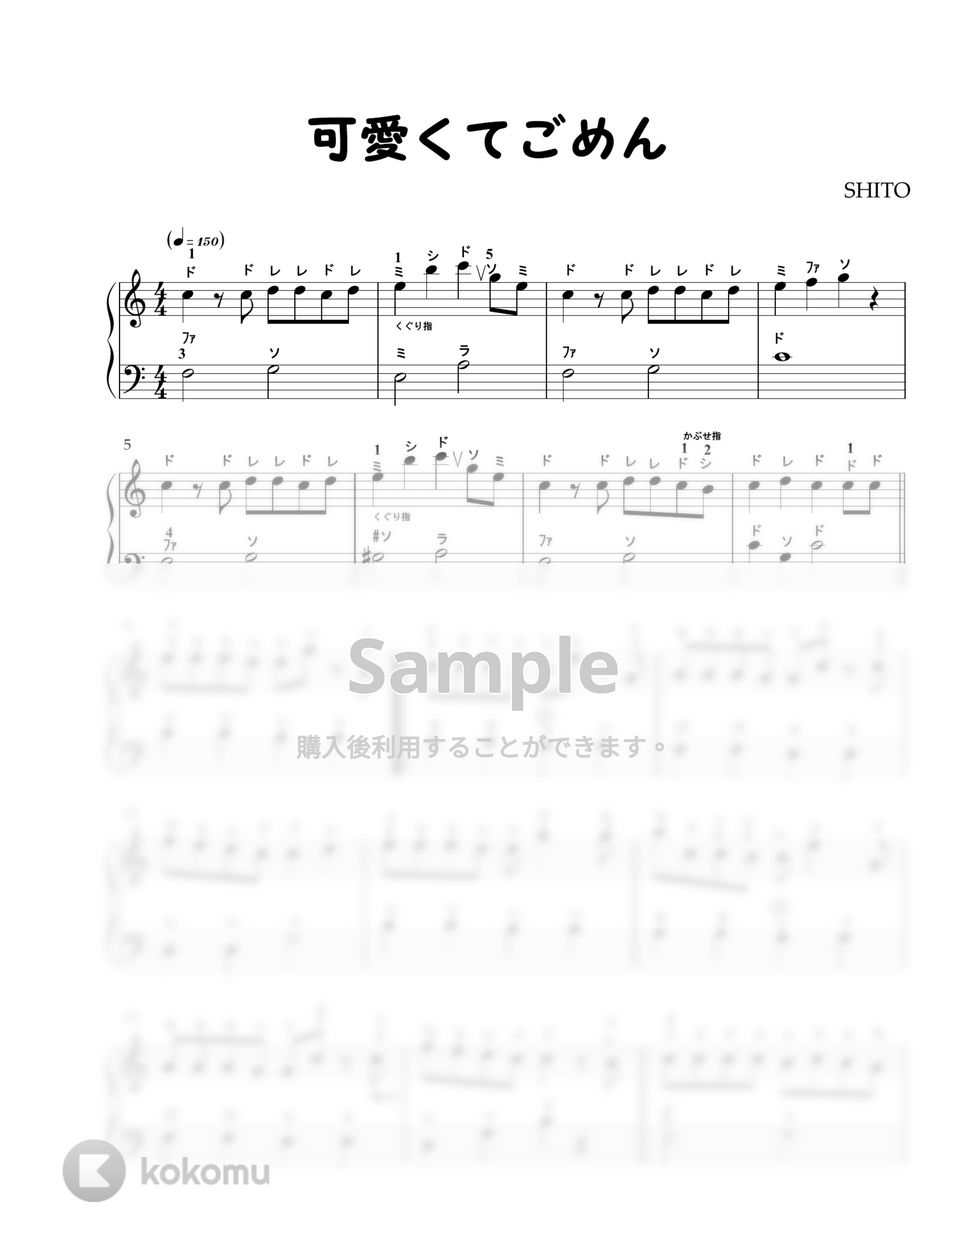 SHITO - 可愛くてごめん (ハ長調) by nokari88